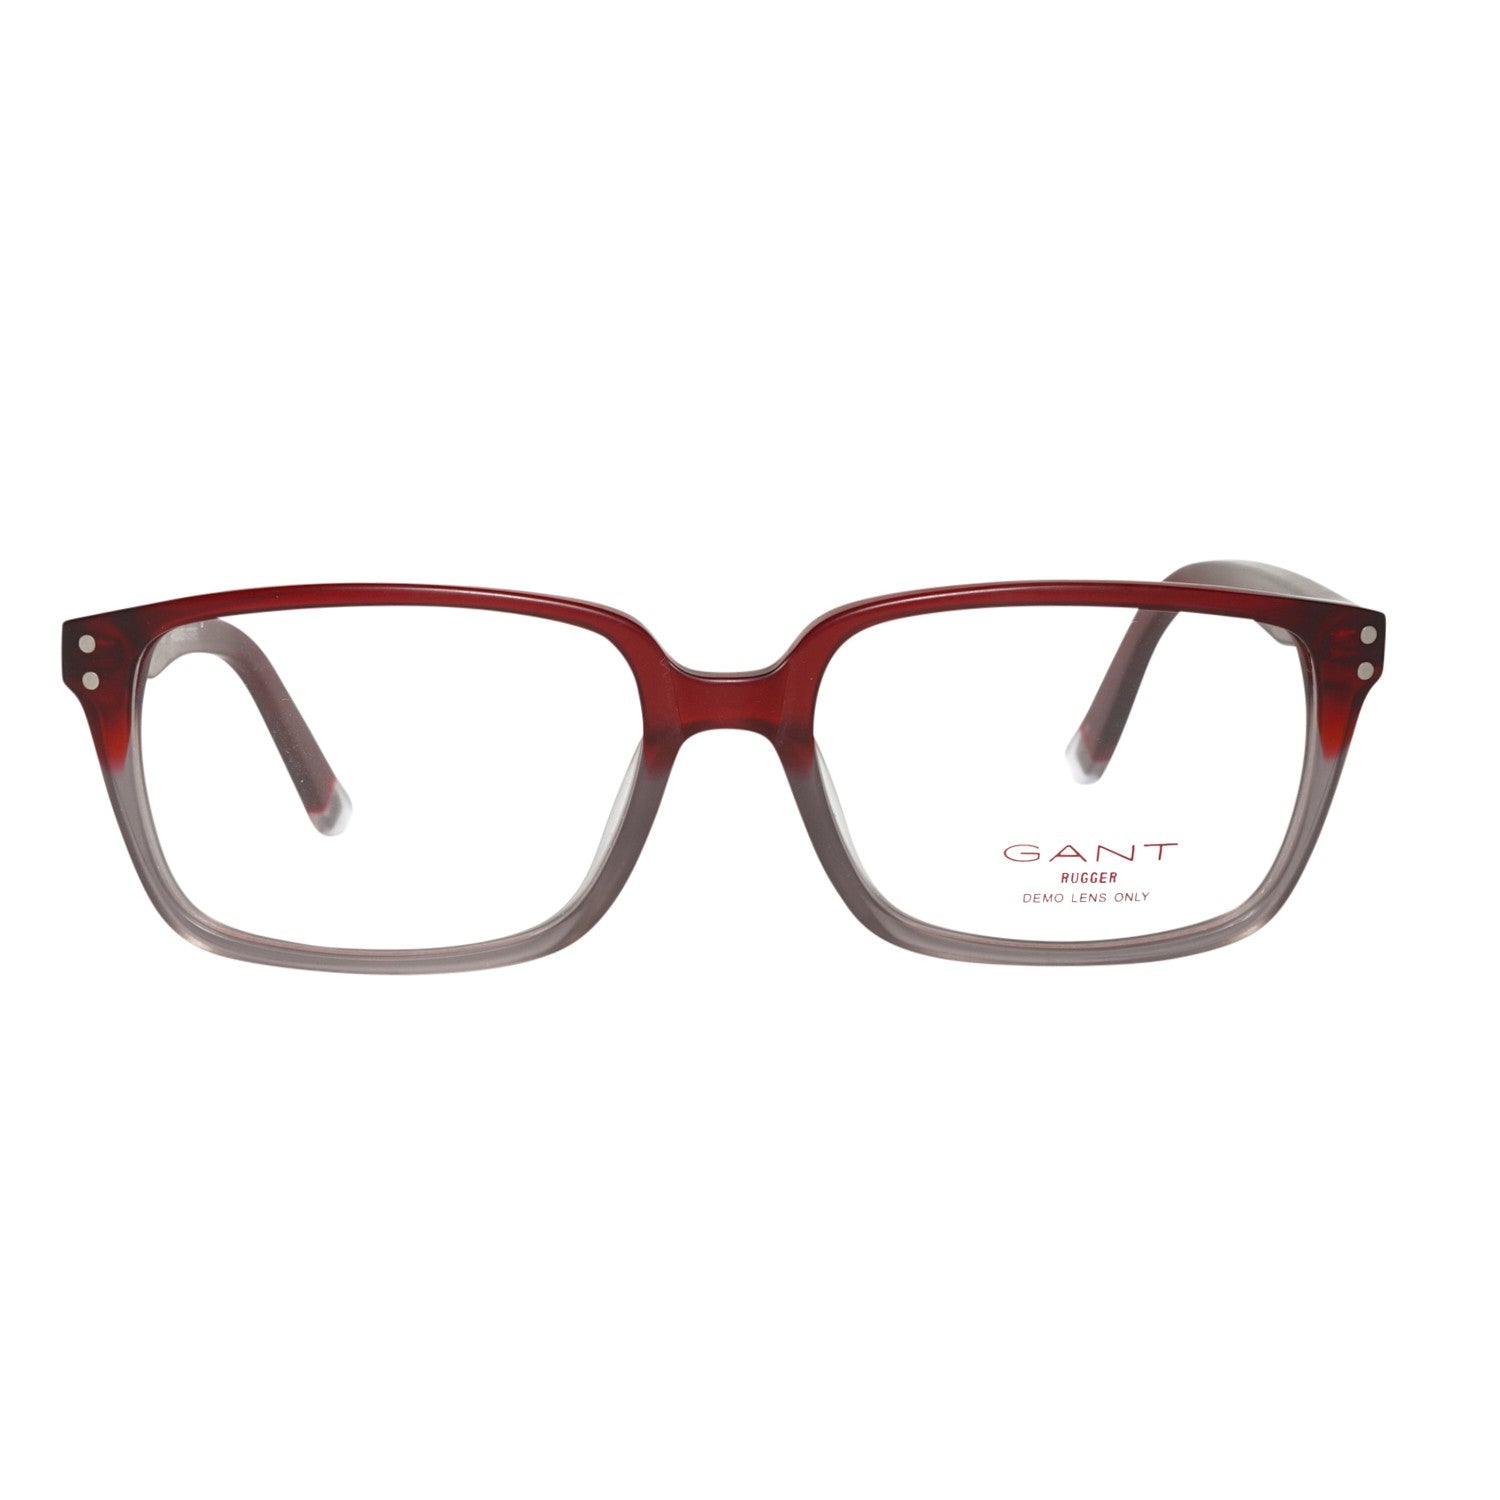 Gant Frames Gant Glasses Frames GRA105 L48 53 | GR 5009 MBUGRY 53 Eyeglasses Eyewear UK USA Australia 